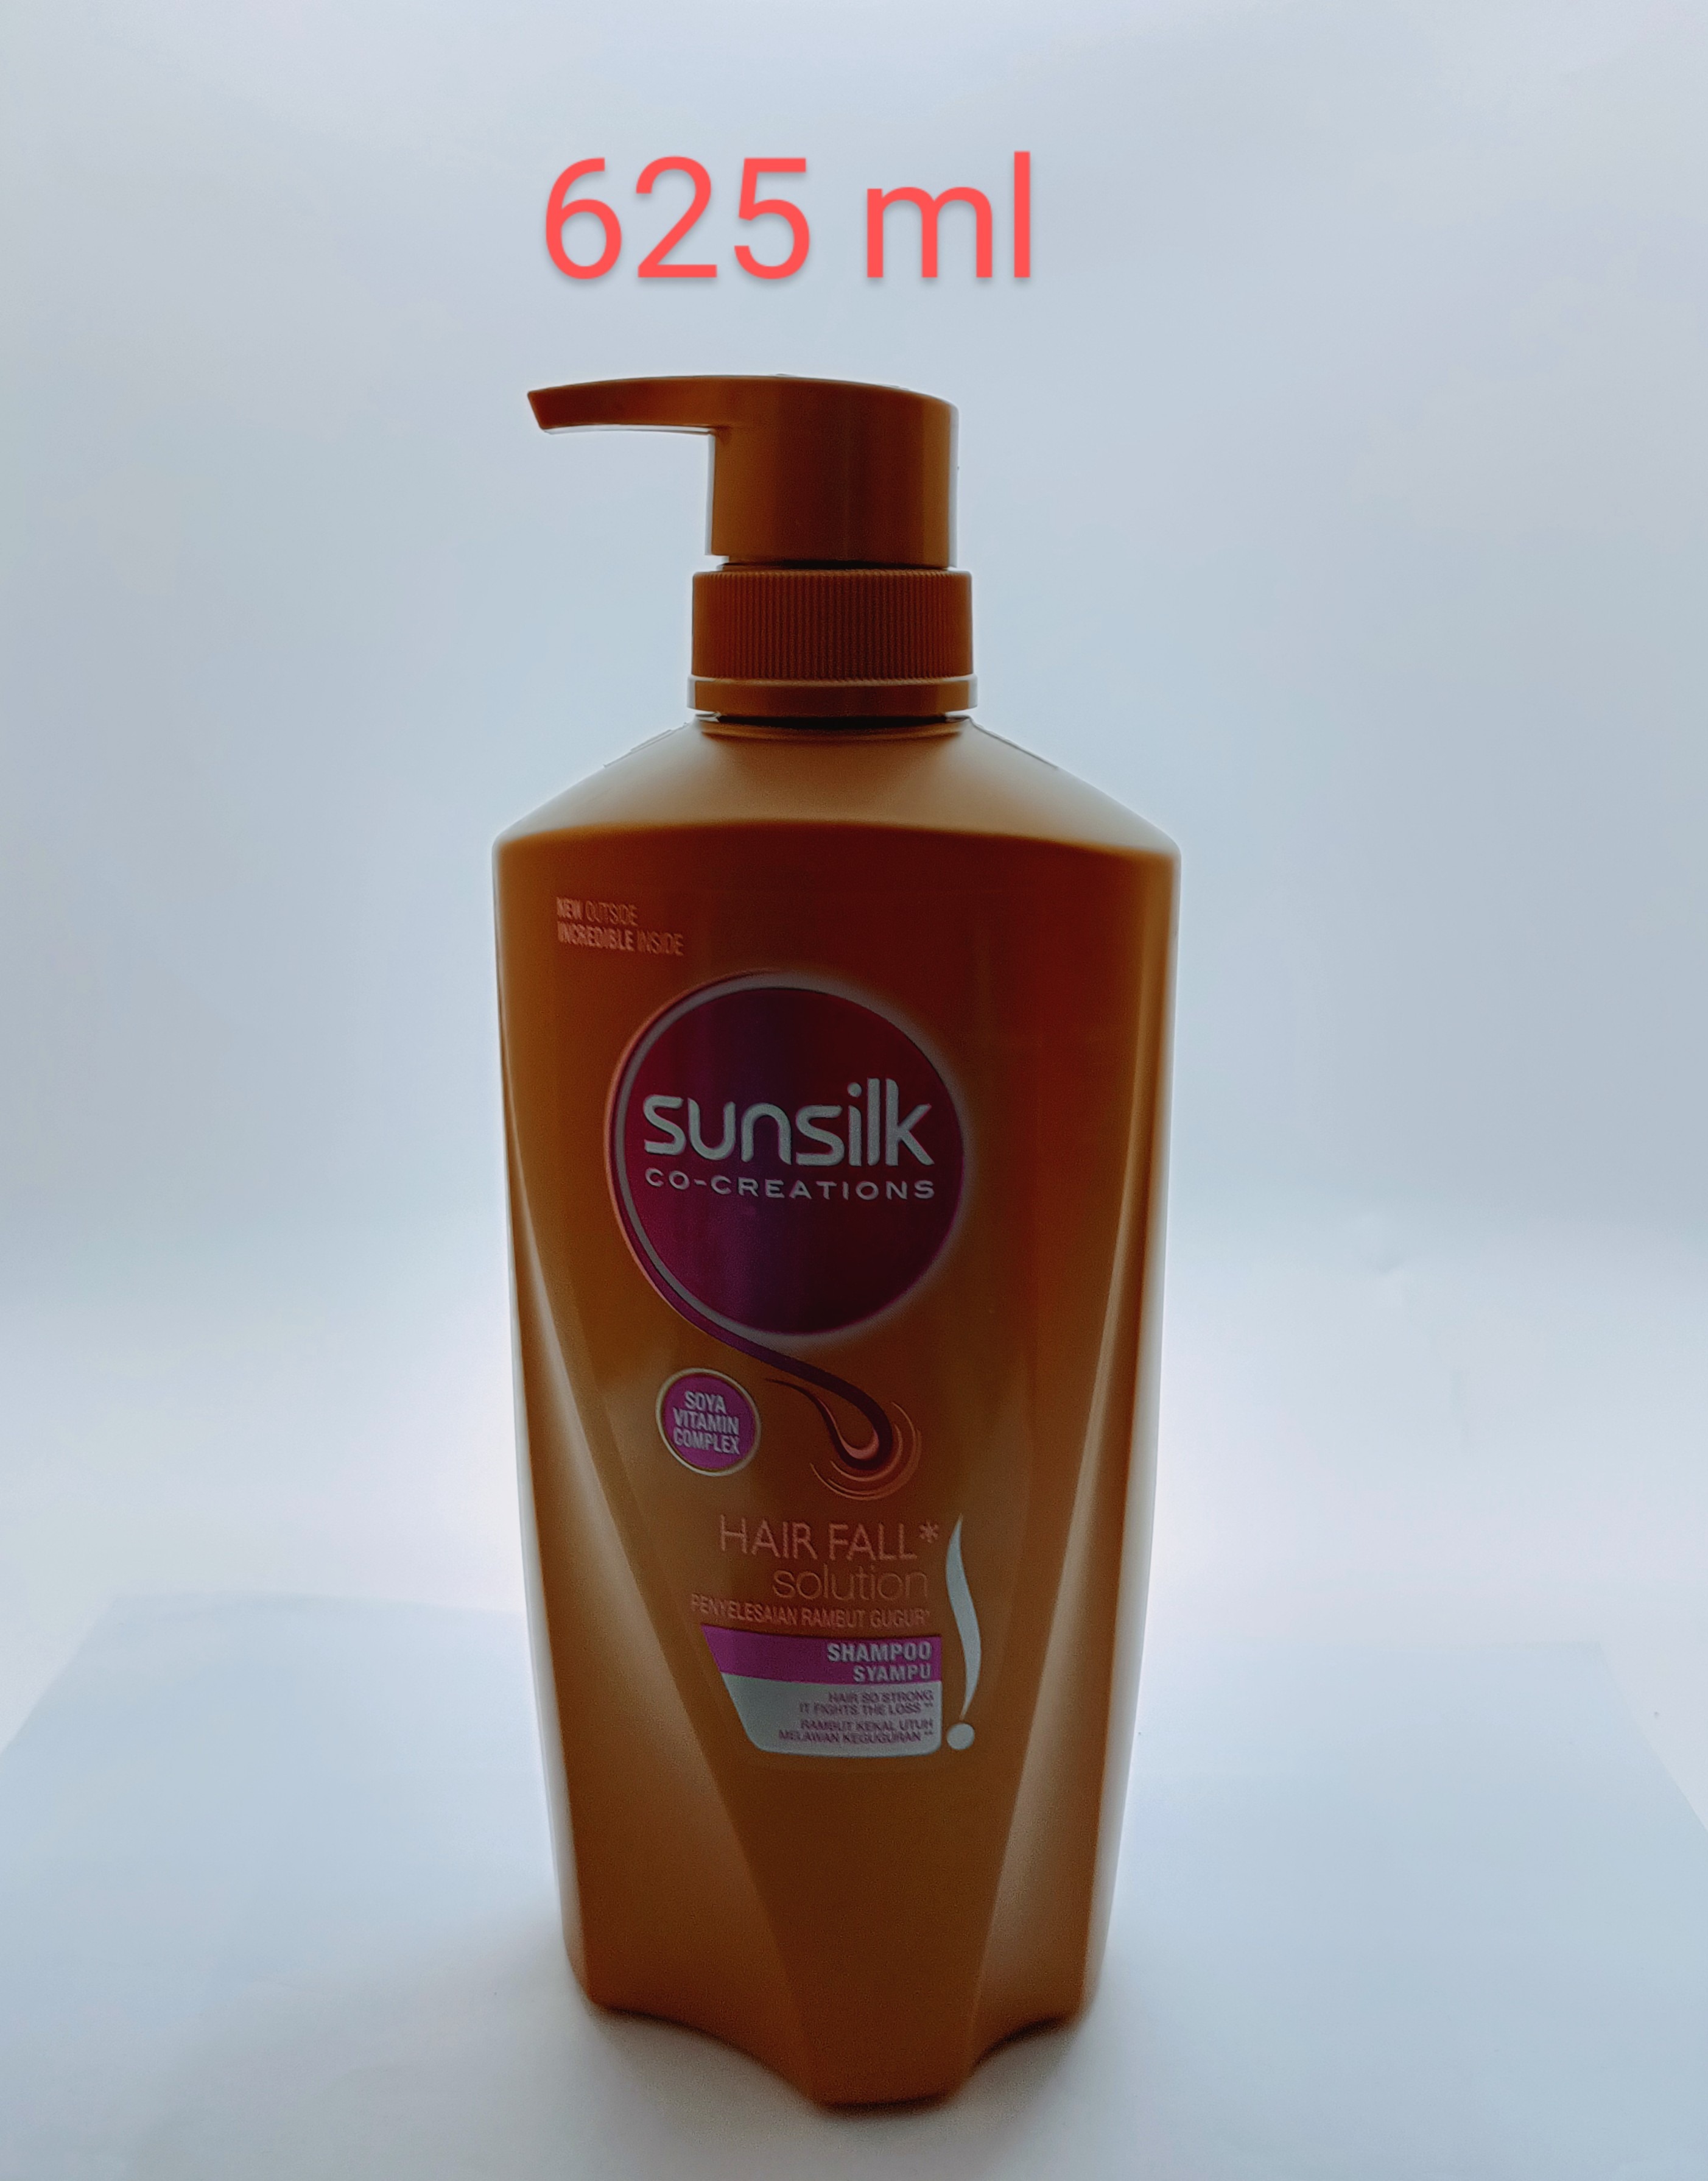 Sunsilk Co-Creations Hair Fall Solution Shampoo-625ml